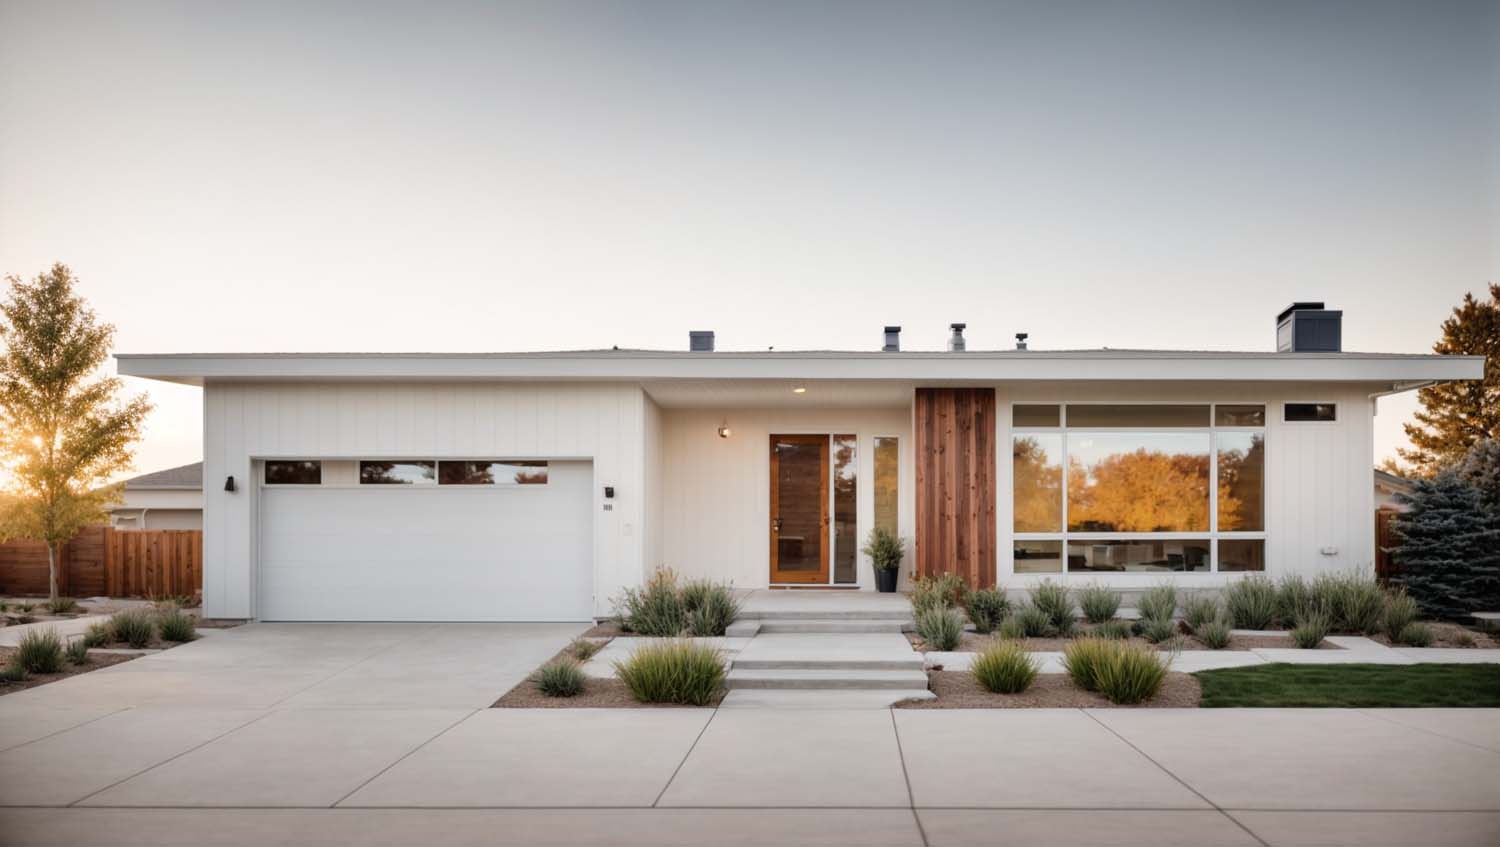 Ranch Style Home with Stucco Siding - Siding Colorado in Colorado Springs